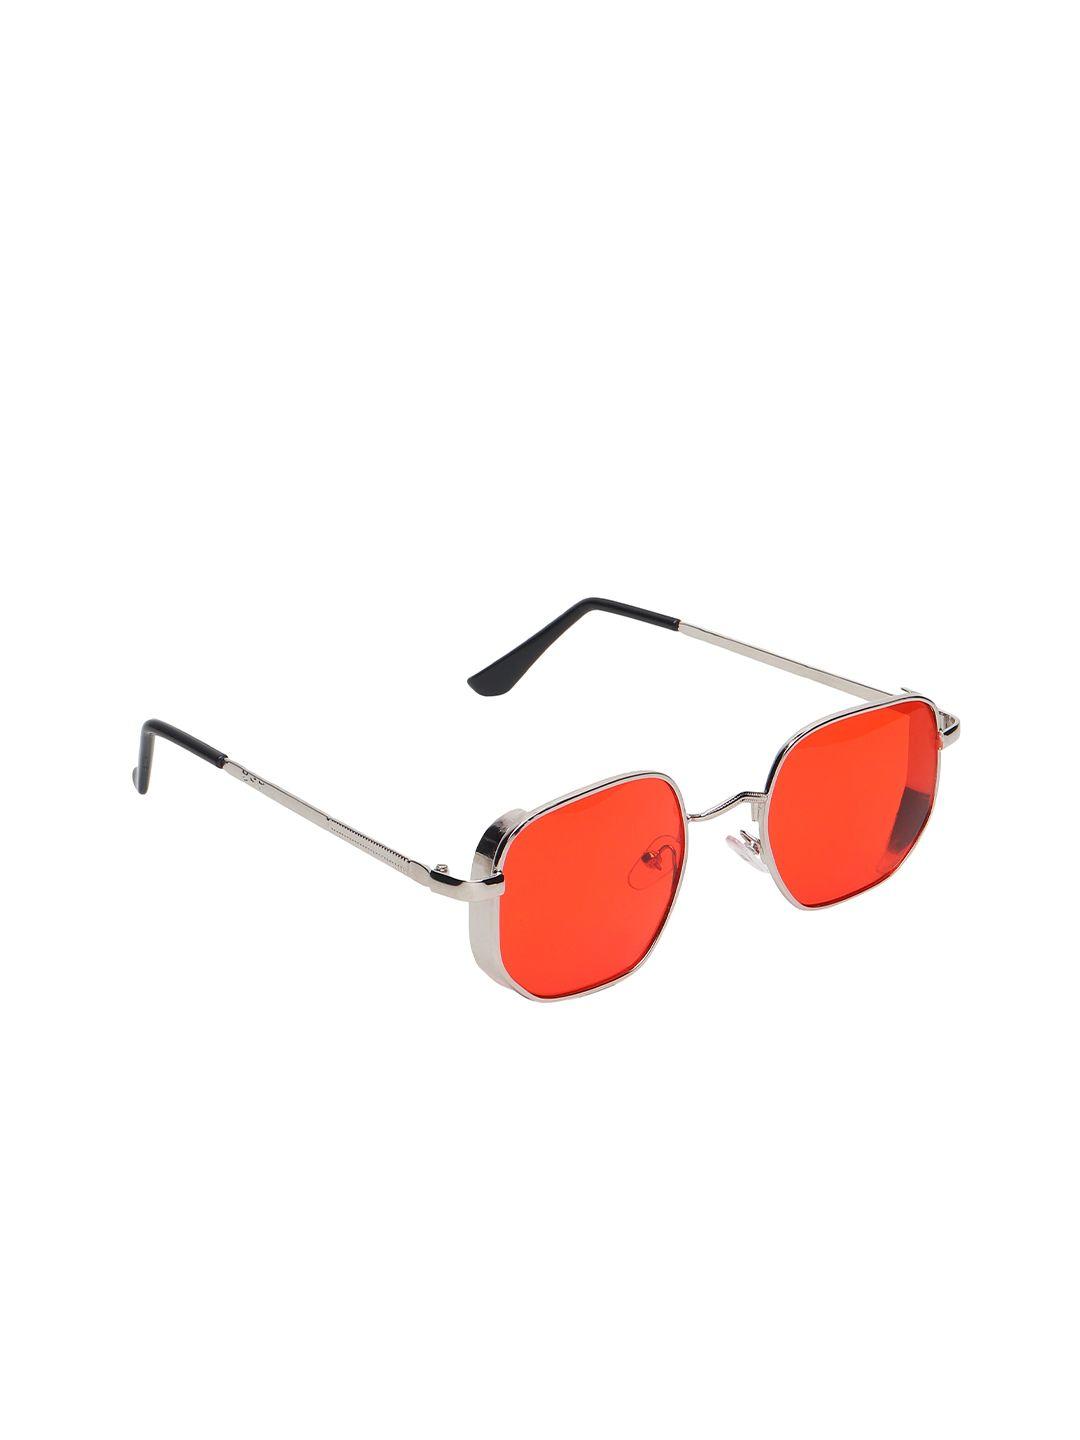 criba wayfarer sunglasses with uv protected lens